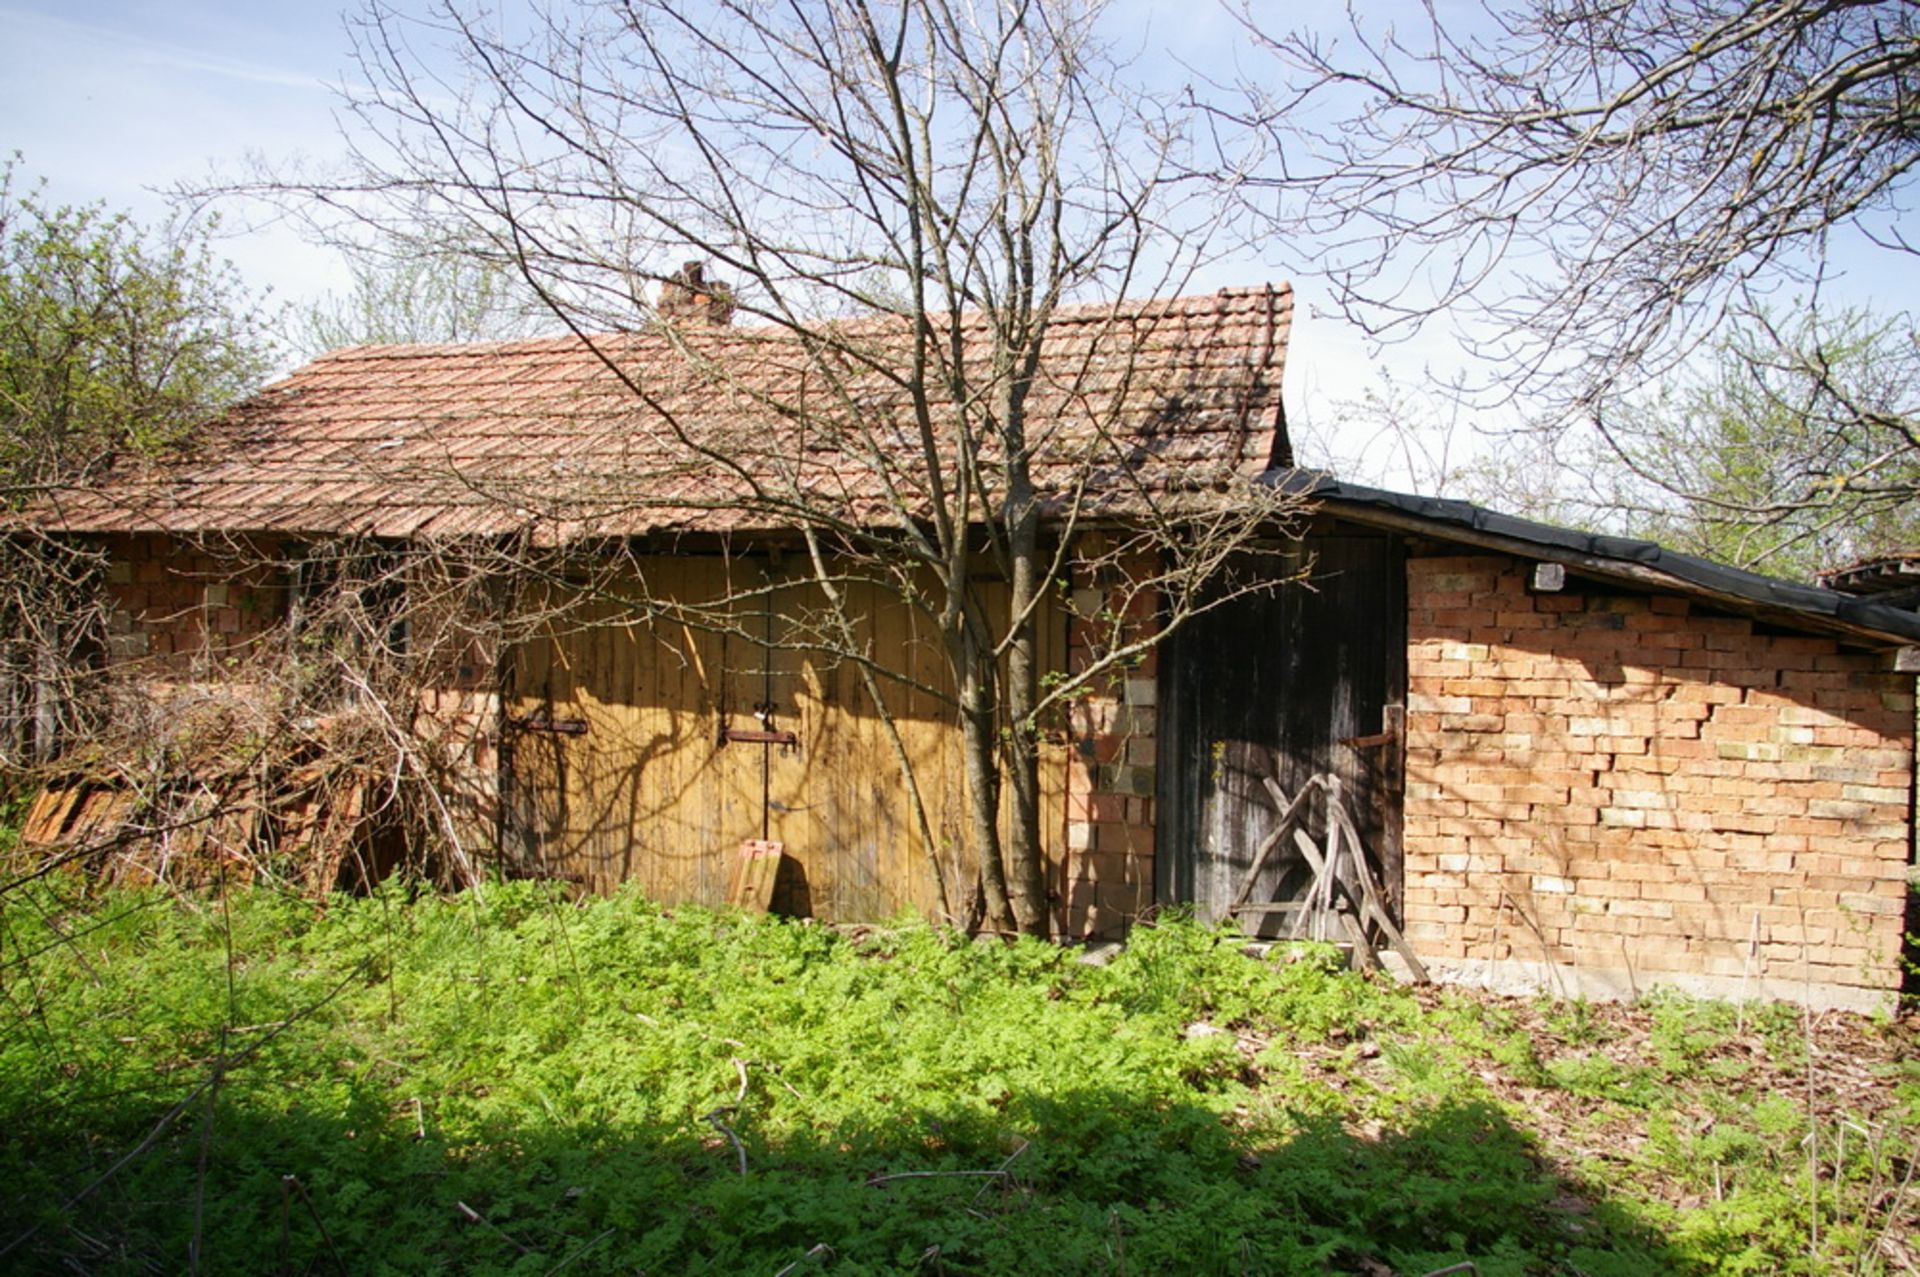 Property in Lagoshevtsi, Vidin region, Bulgaria, with 1.26 Acre land